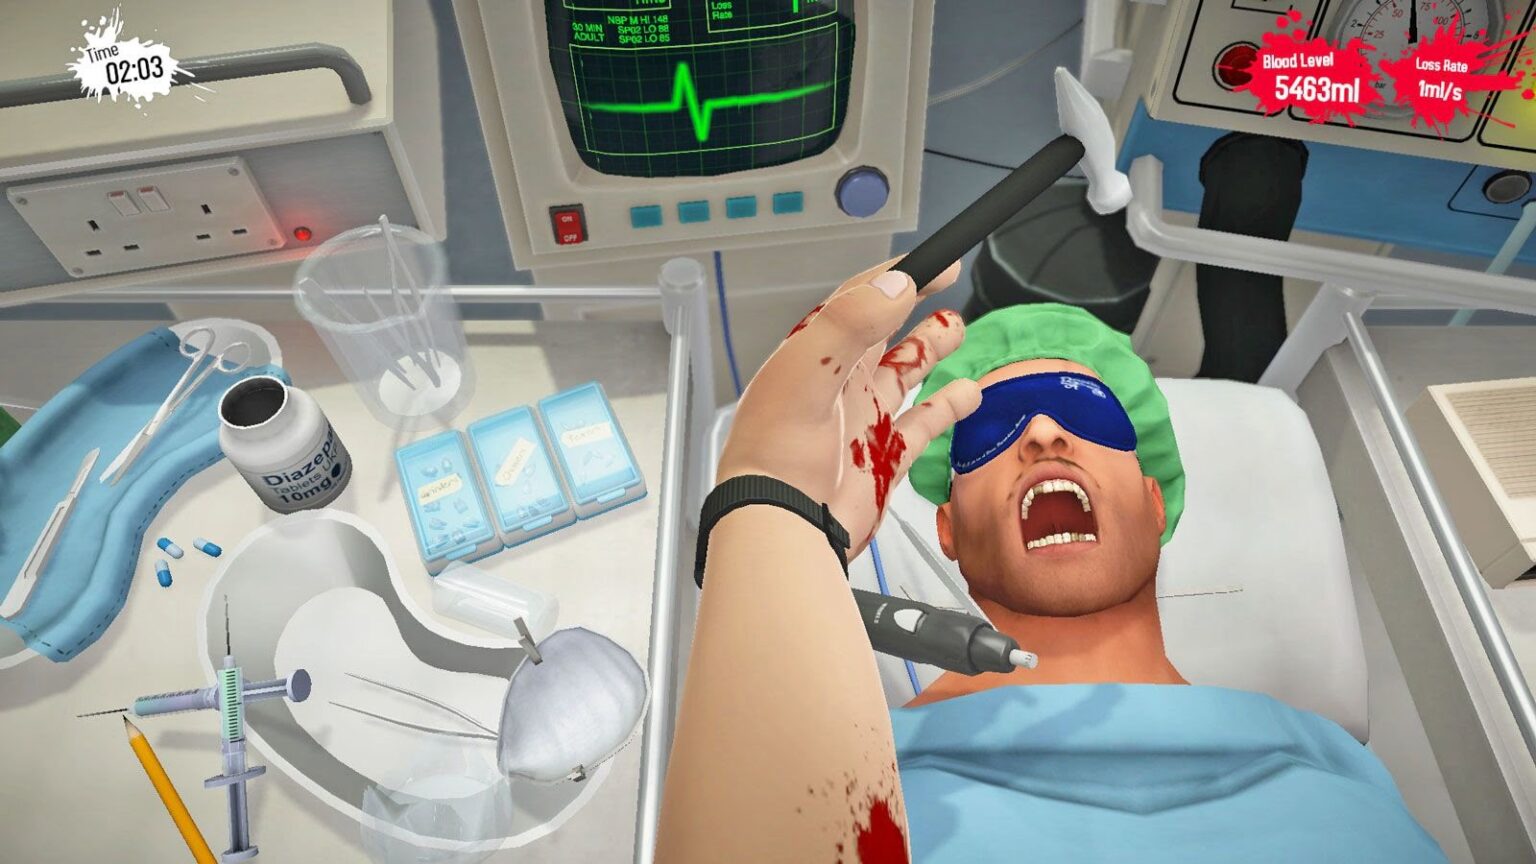 surgeon simulator apk 1.4